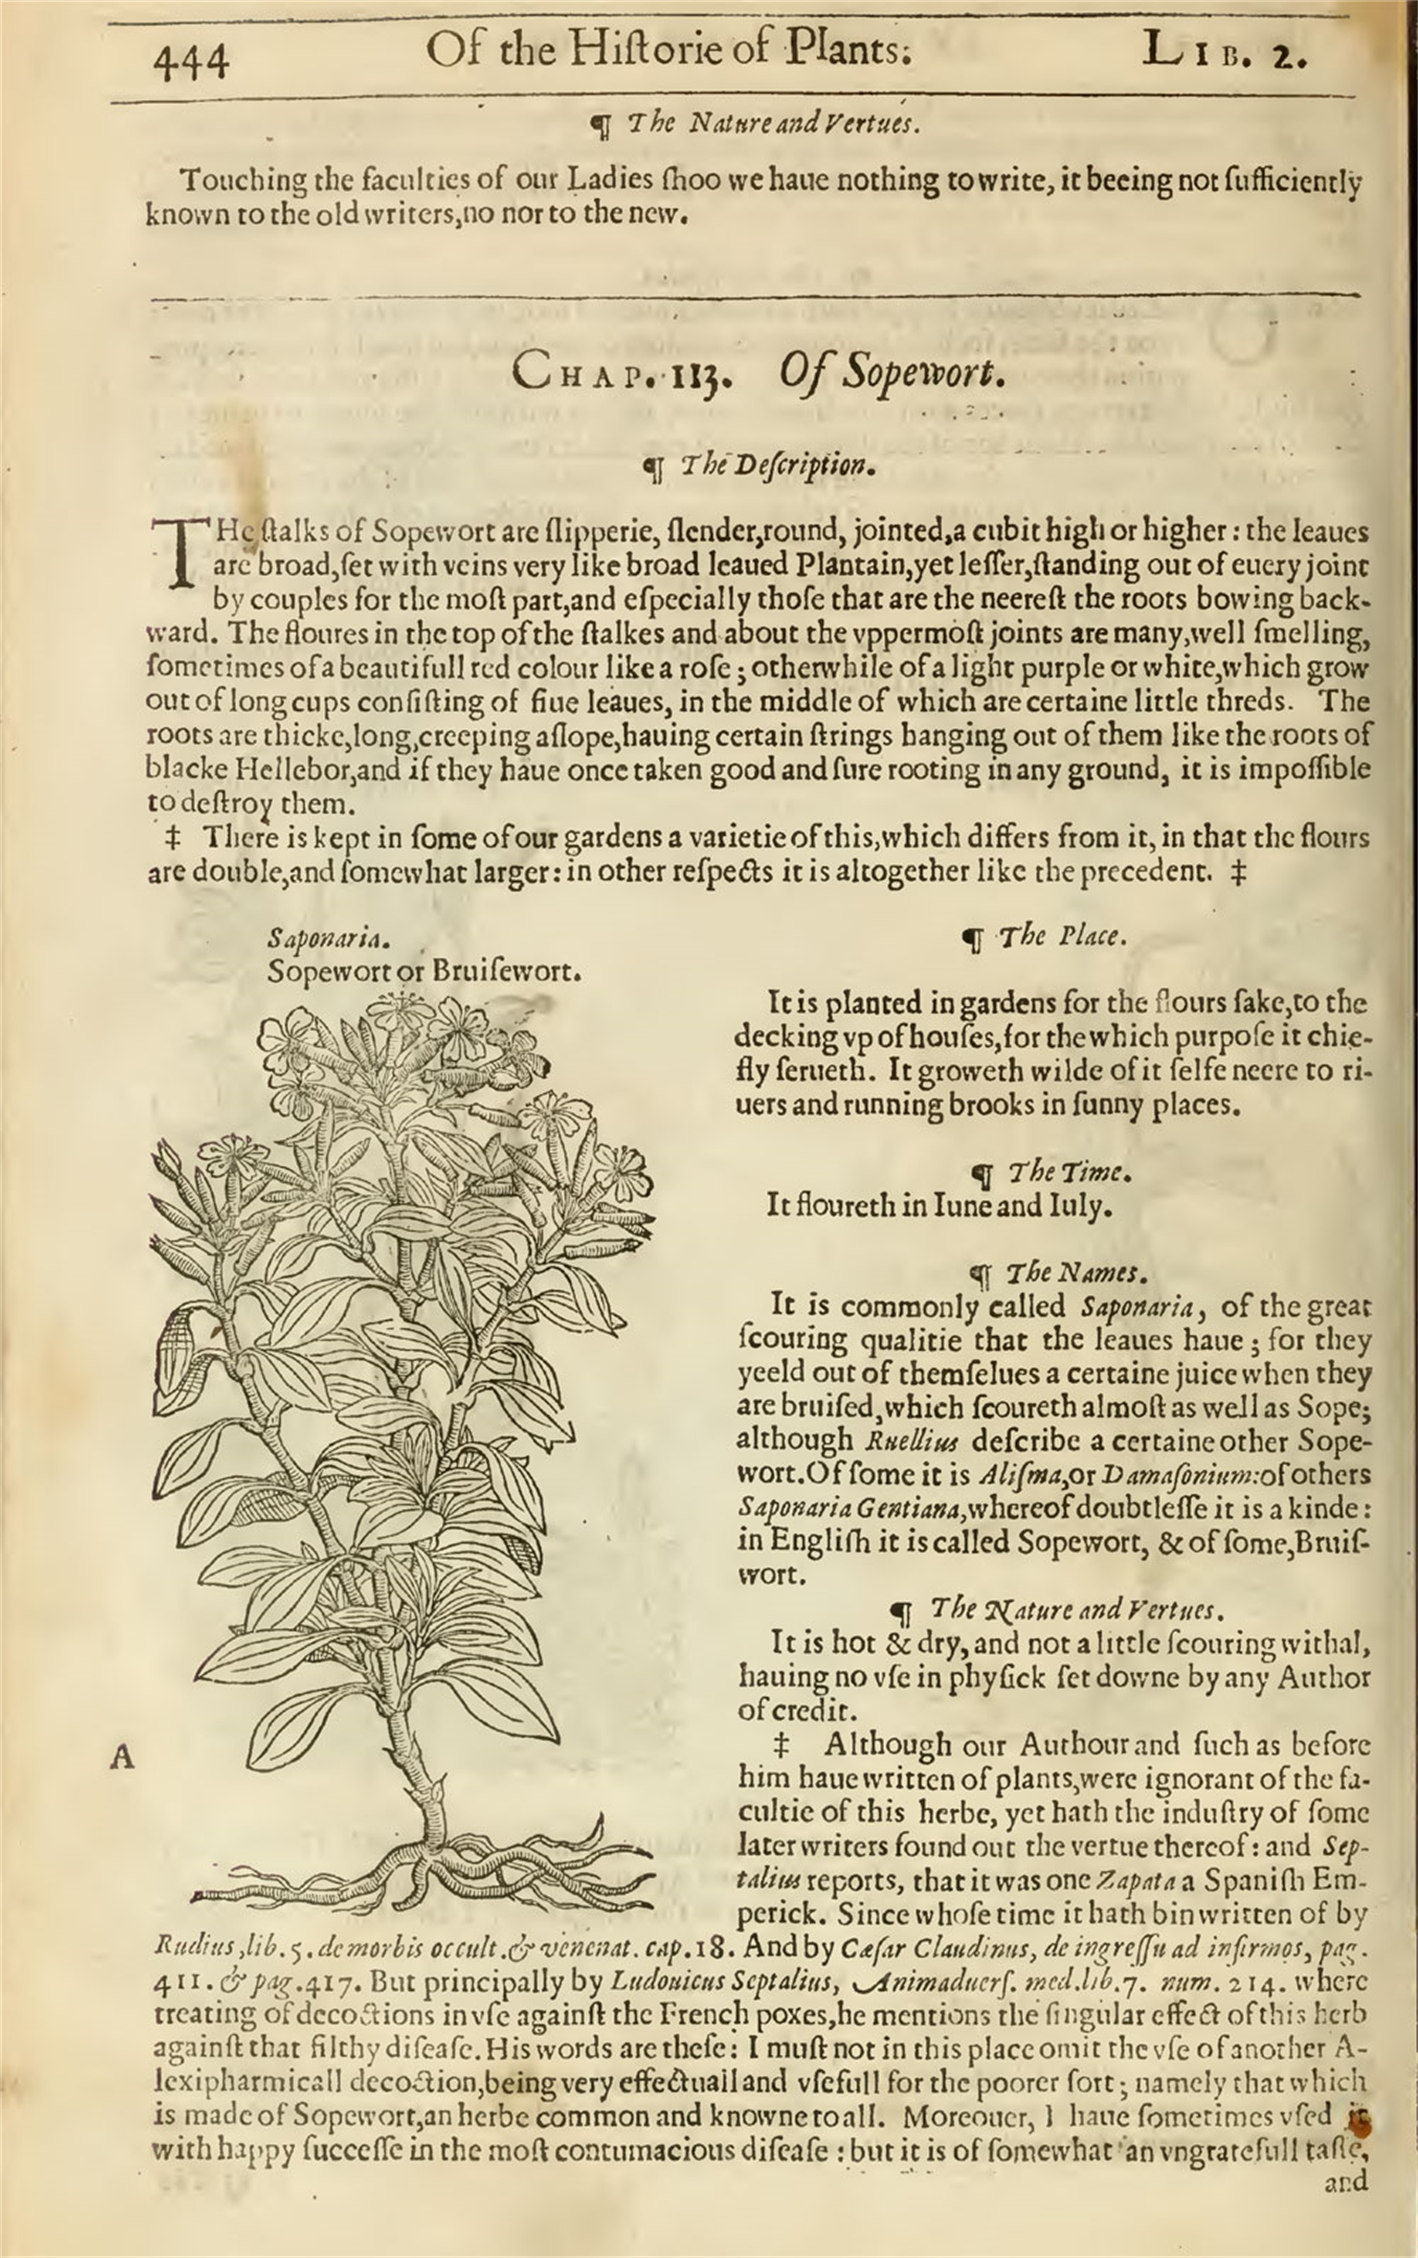 Страница "Травника" 1636 года с описанием и рисунком мыльнянки.